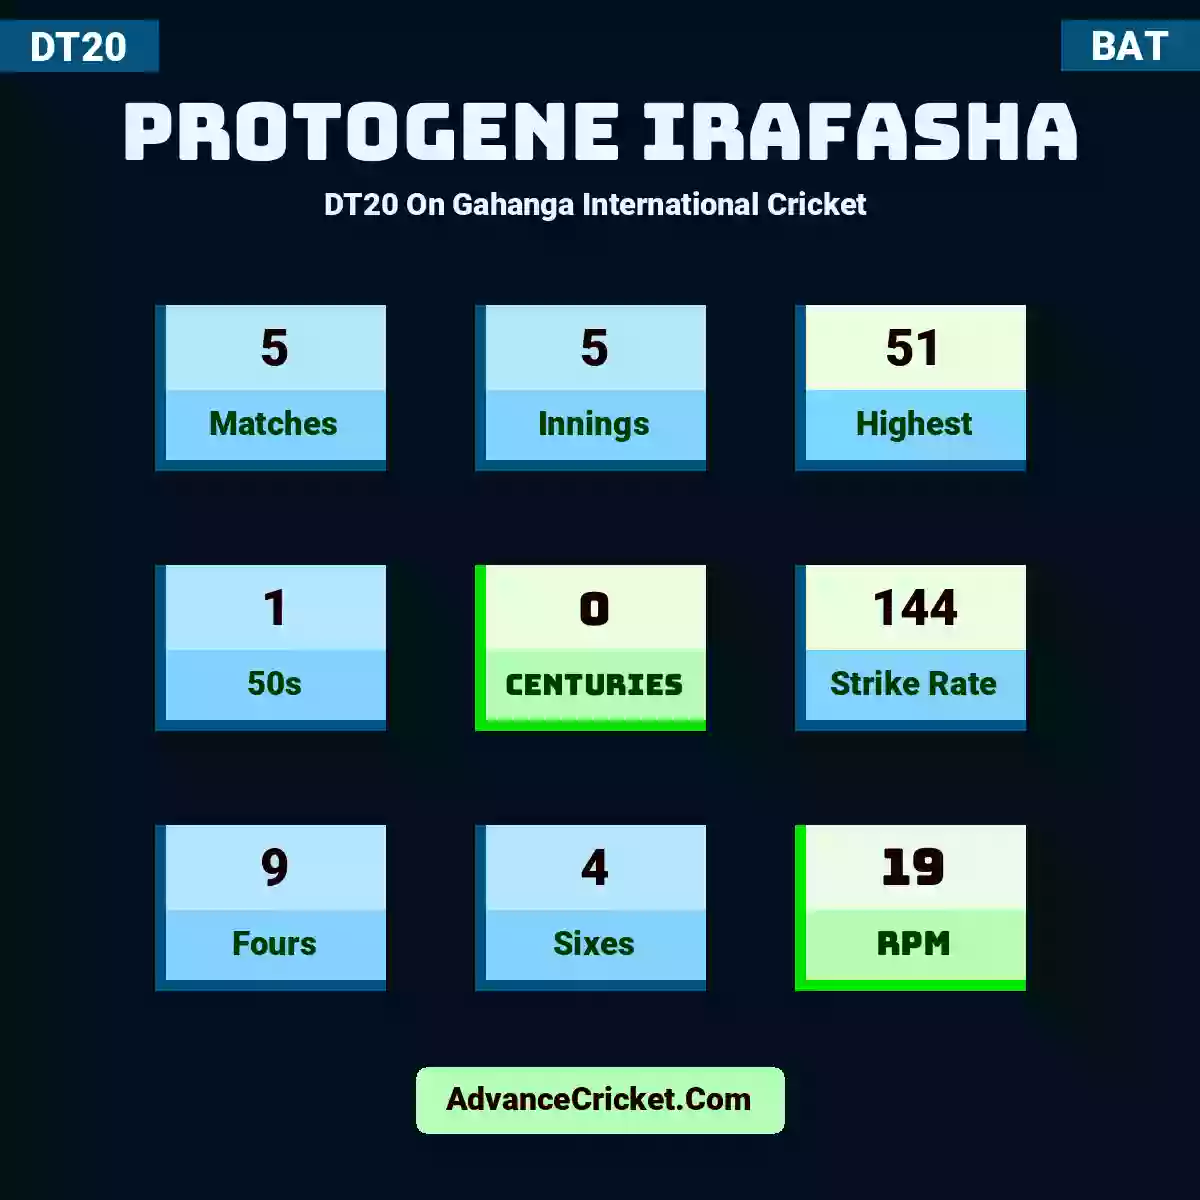 Protogene Irafasha DT20  On Gahanga International Cricket , Protogene Irafasha played 5 matches, scored 51 runs as highest, 1 half-centuries, and 0 centuries, with a strike rate of 144. P.Irafasha hit 9 fours and 4 sixes, with an RPM of 19.